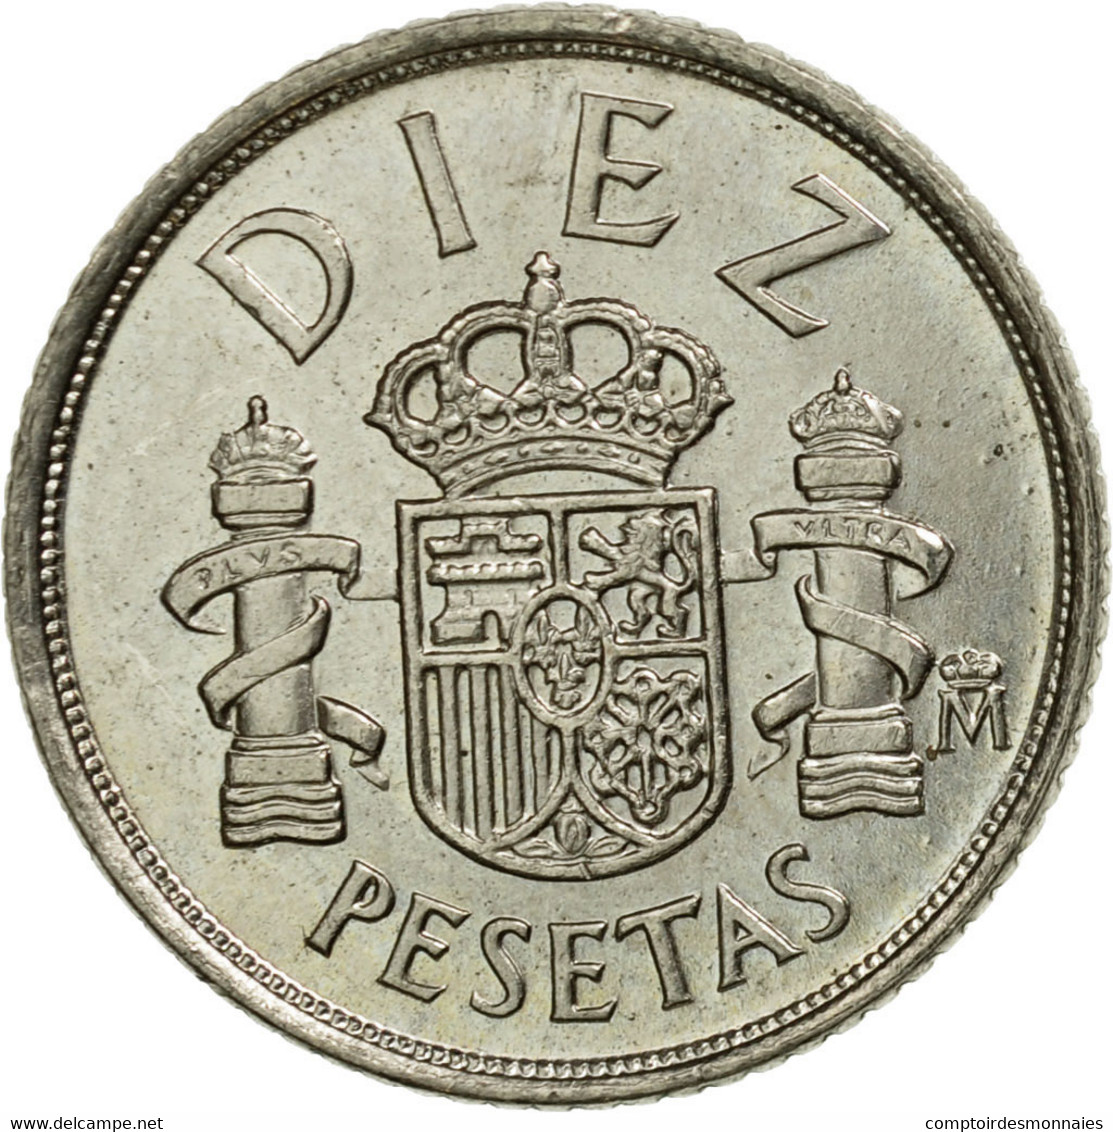 Monnaie, Espagne, Juan Carlos I, 10 Pesetas, 1985, TTB+, Copper-nickel, KM:827 - 10 Pesetas